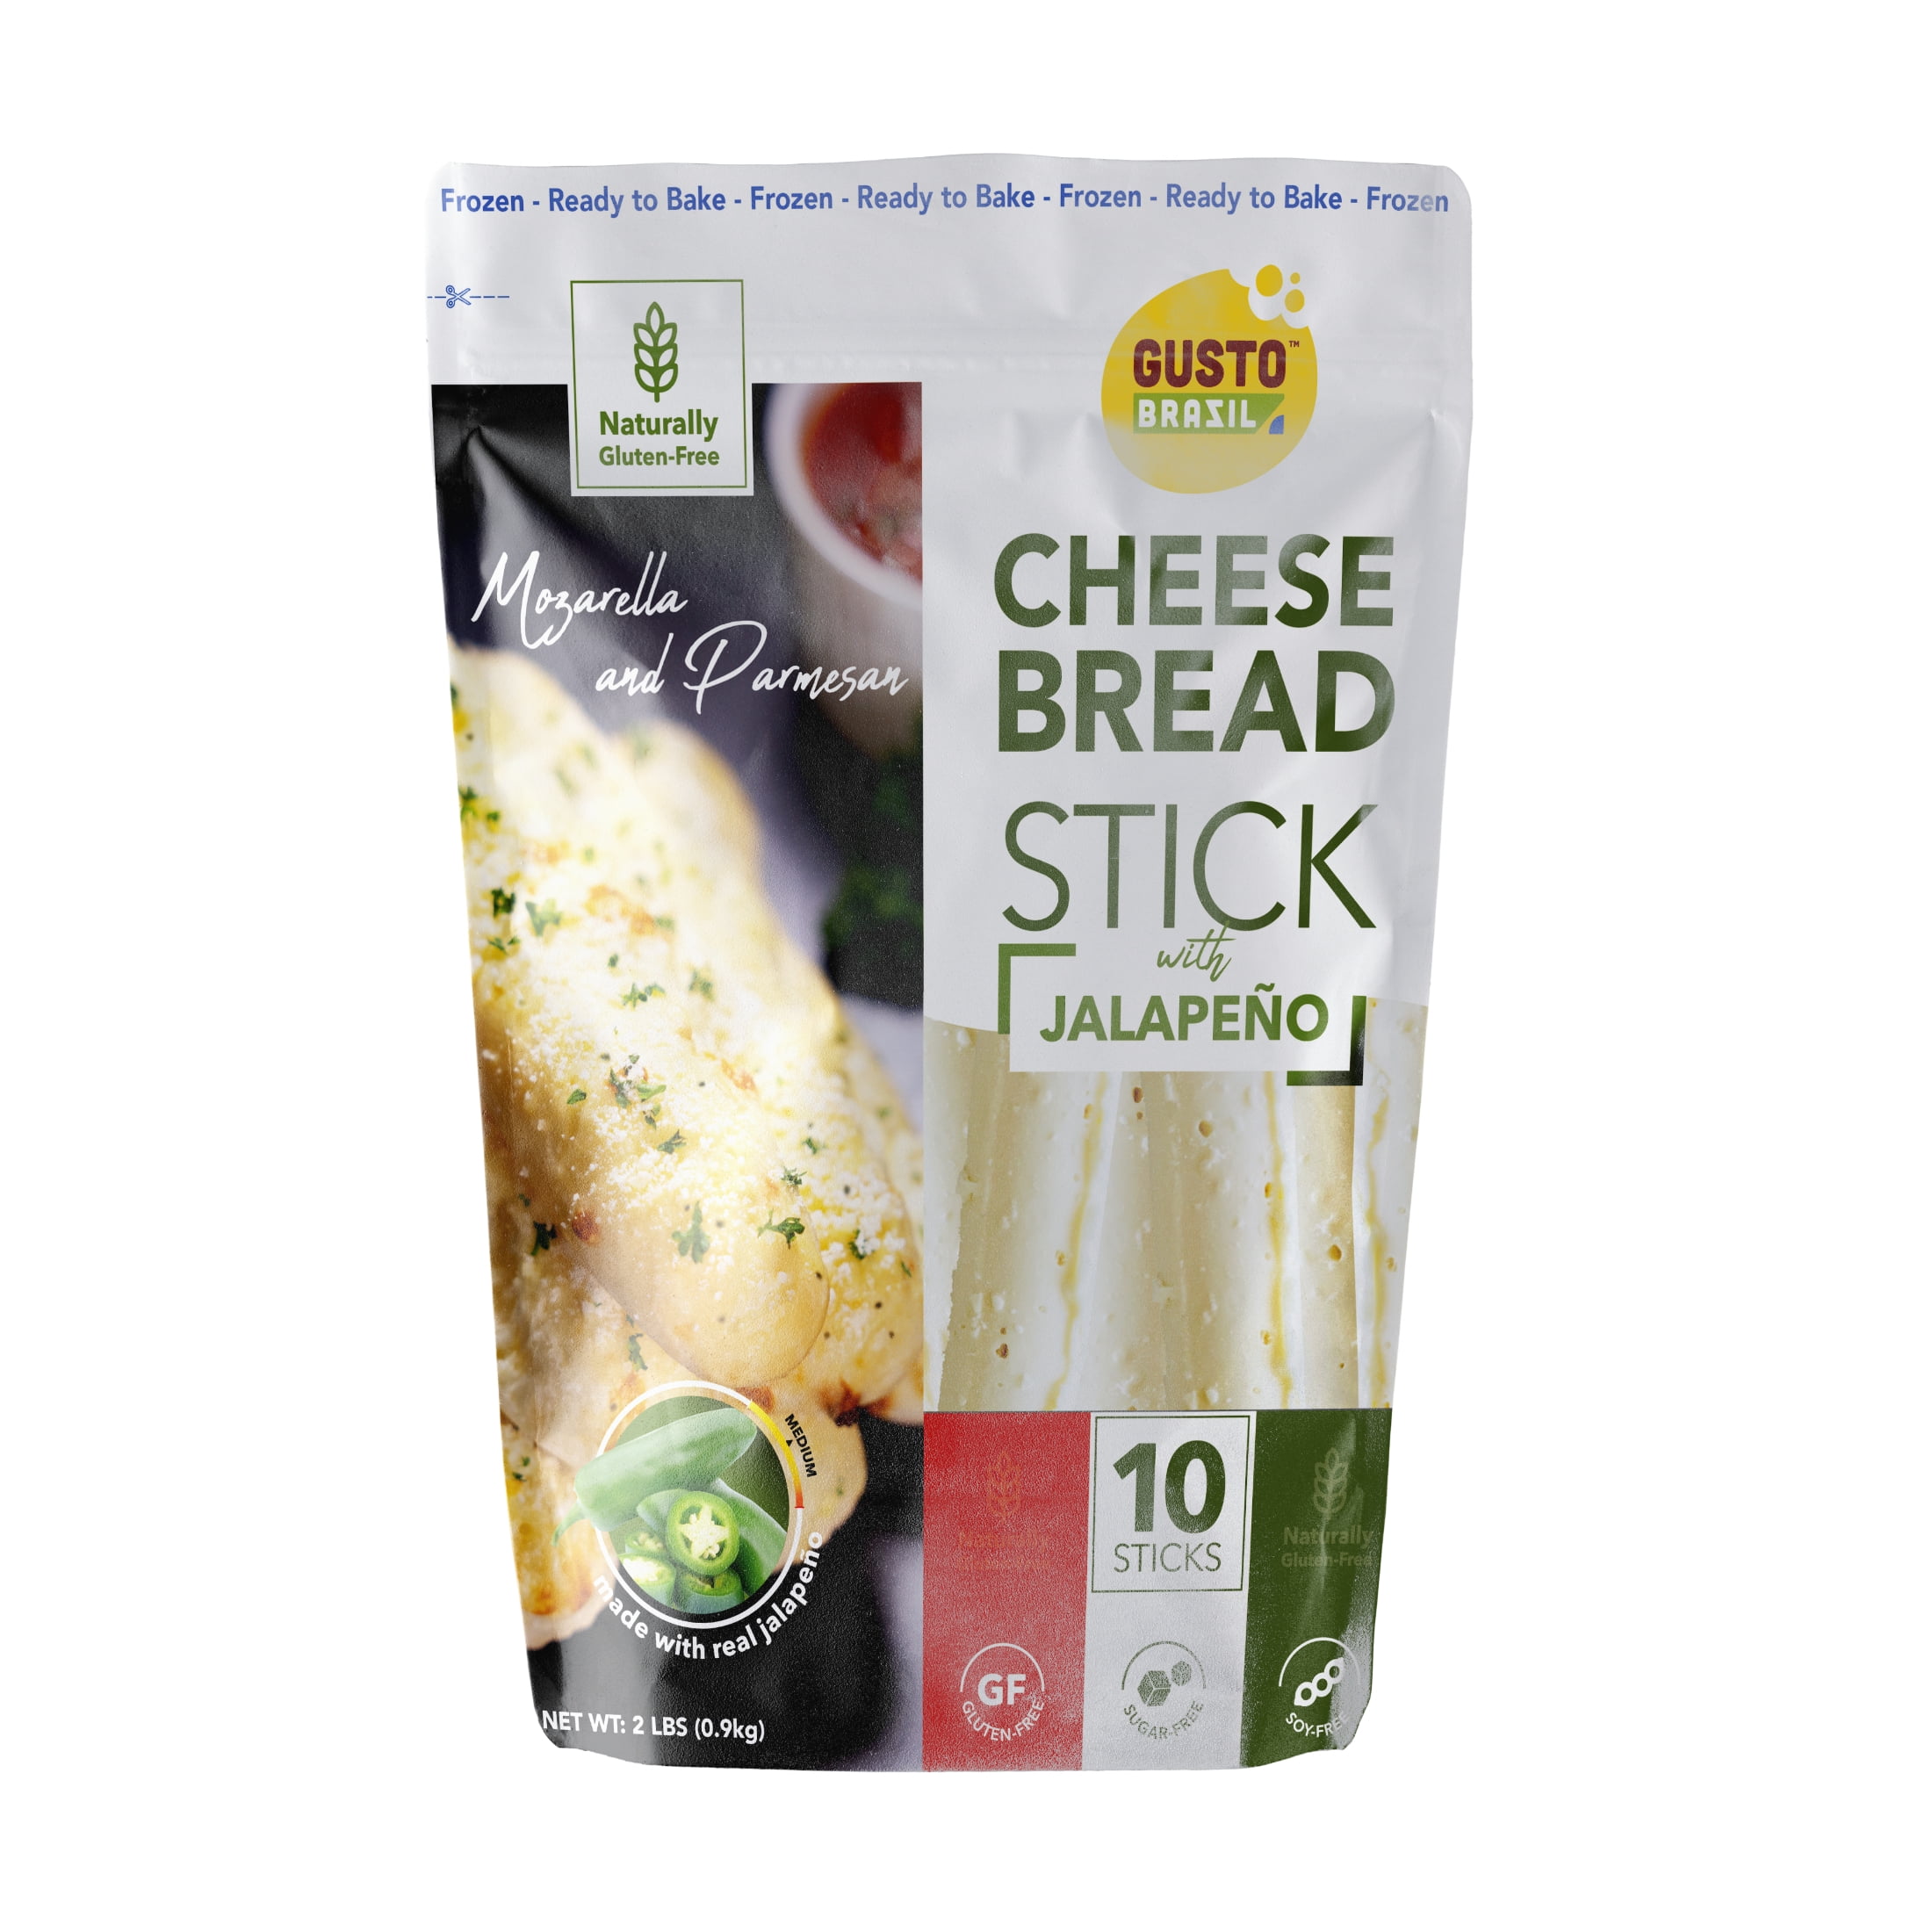 Gusto Brazil Cheese Bread (4 Pack - 2.2lbs per bag) - Walmart.com